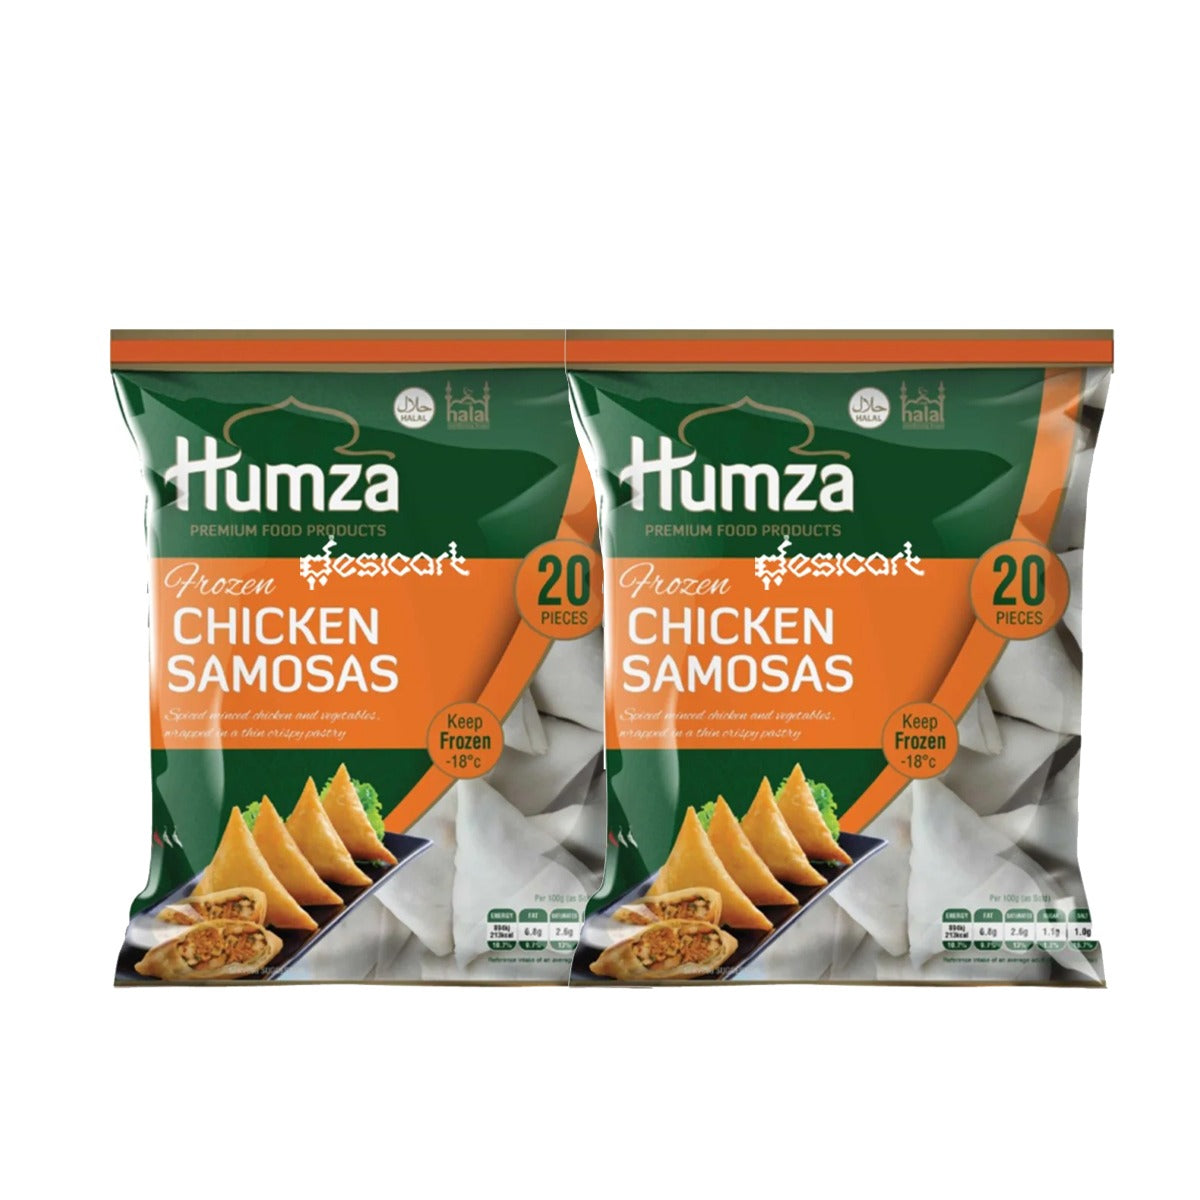 Humza Chicken Samosa (Pack of 2) 20 Pieces